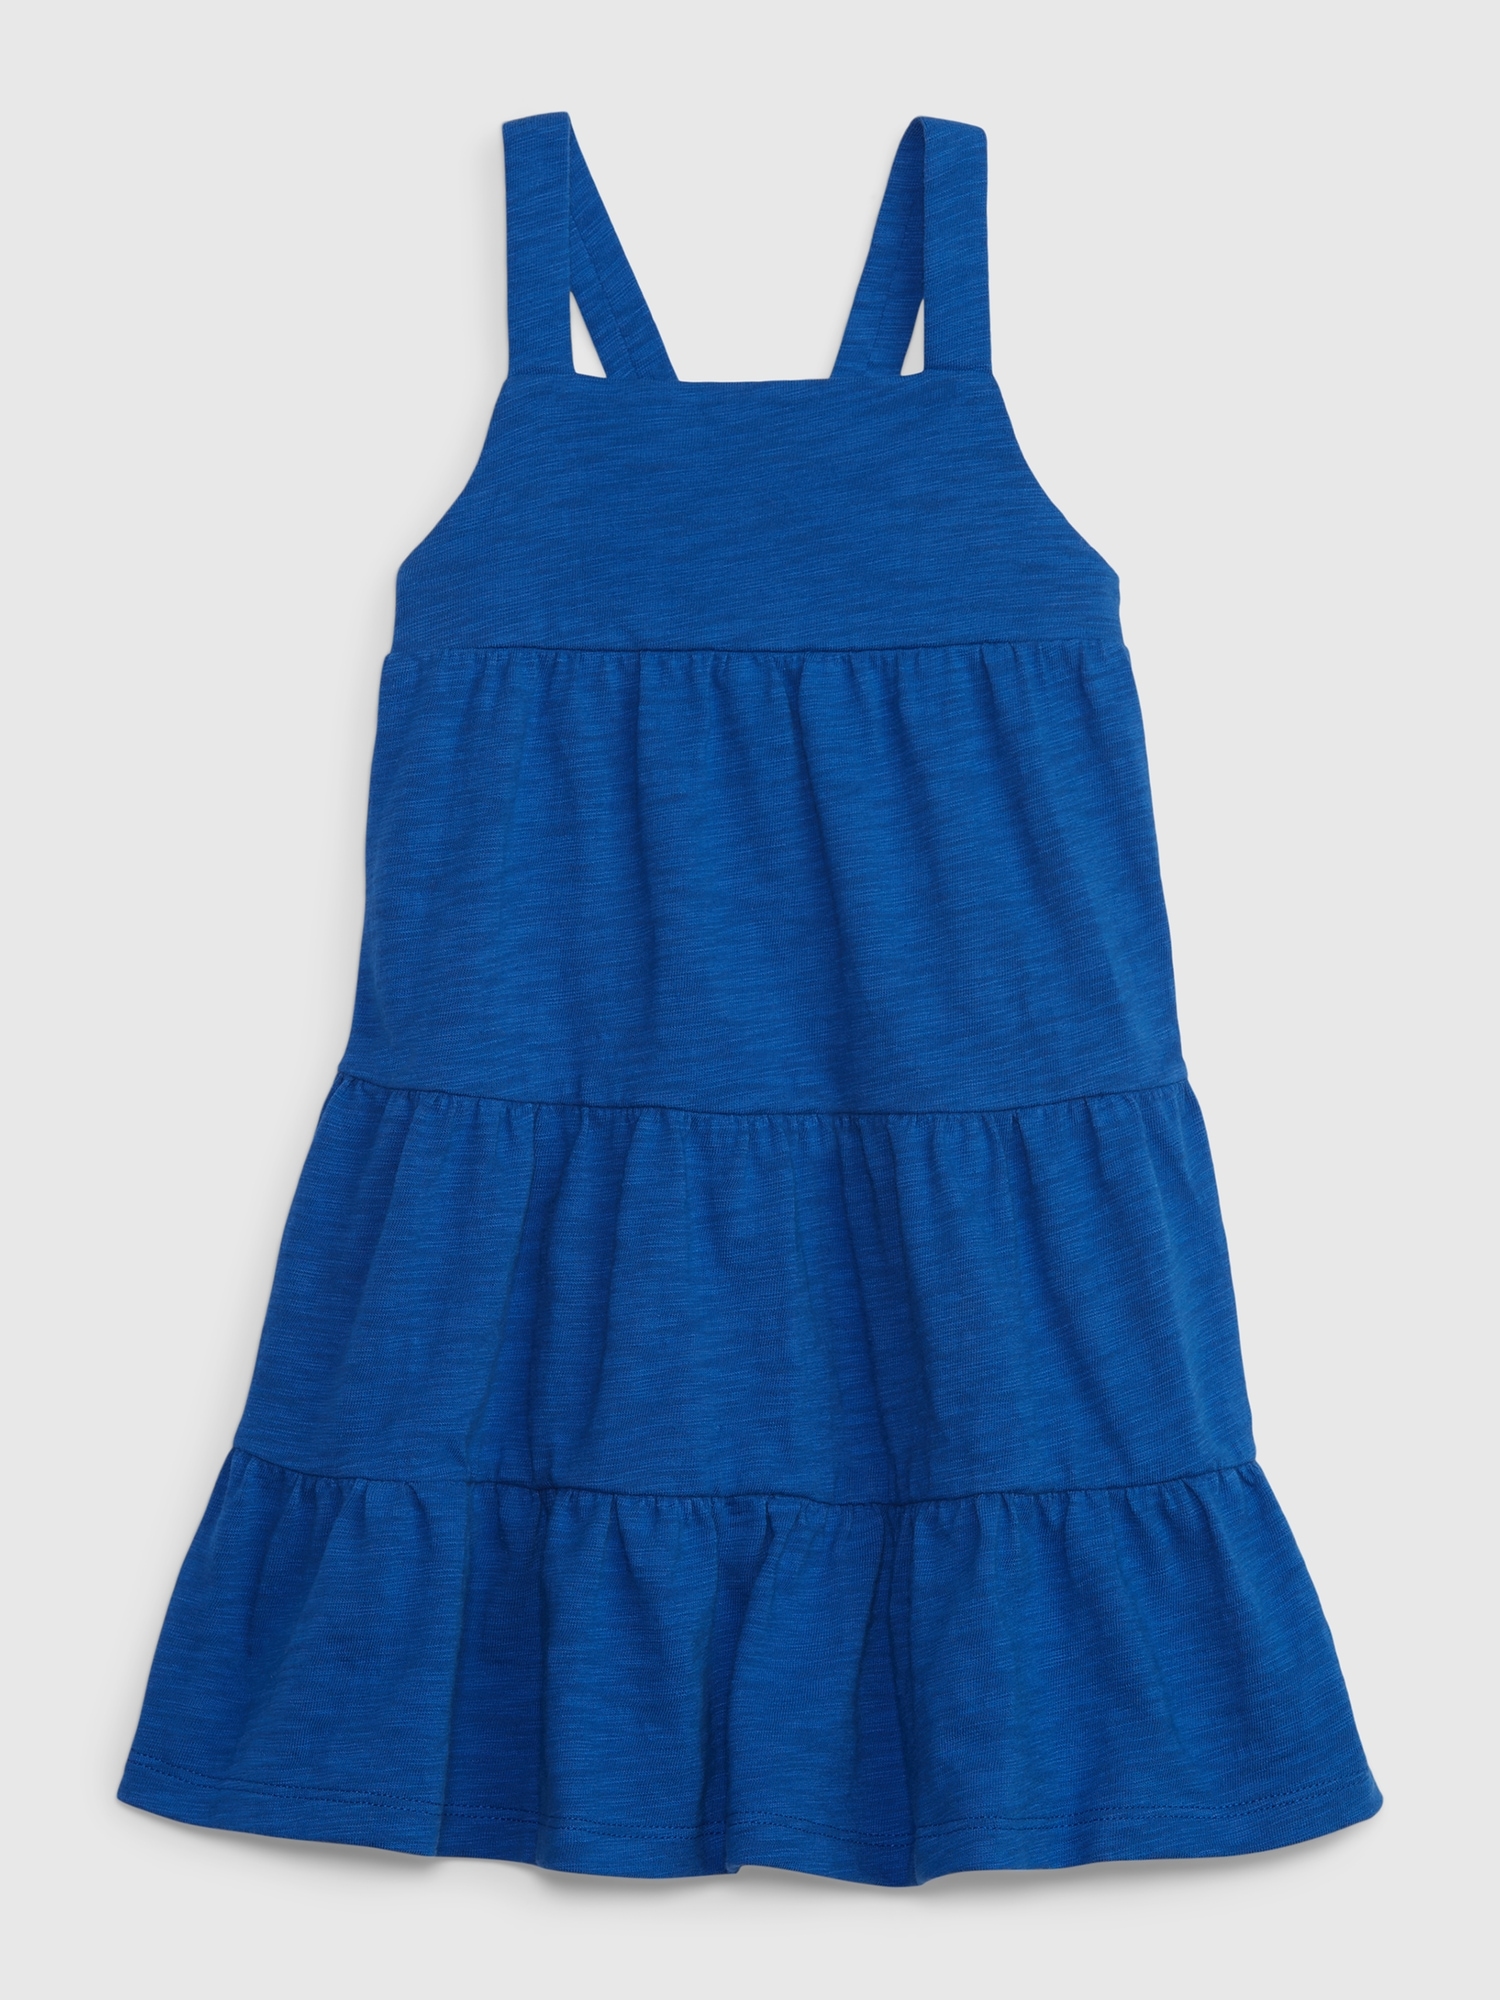 Gap Toddler Tiered Dress blue. 1